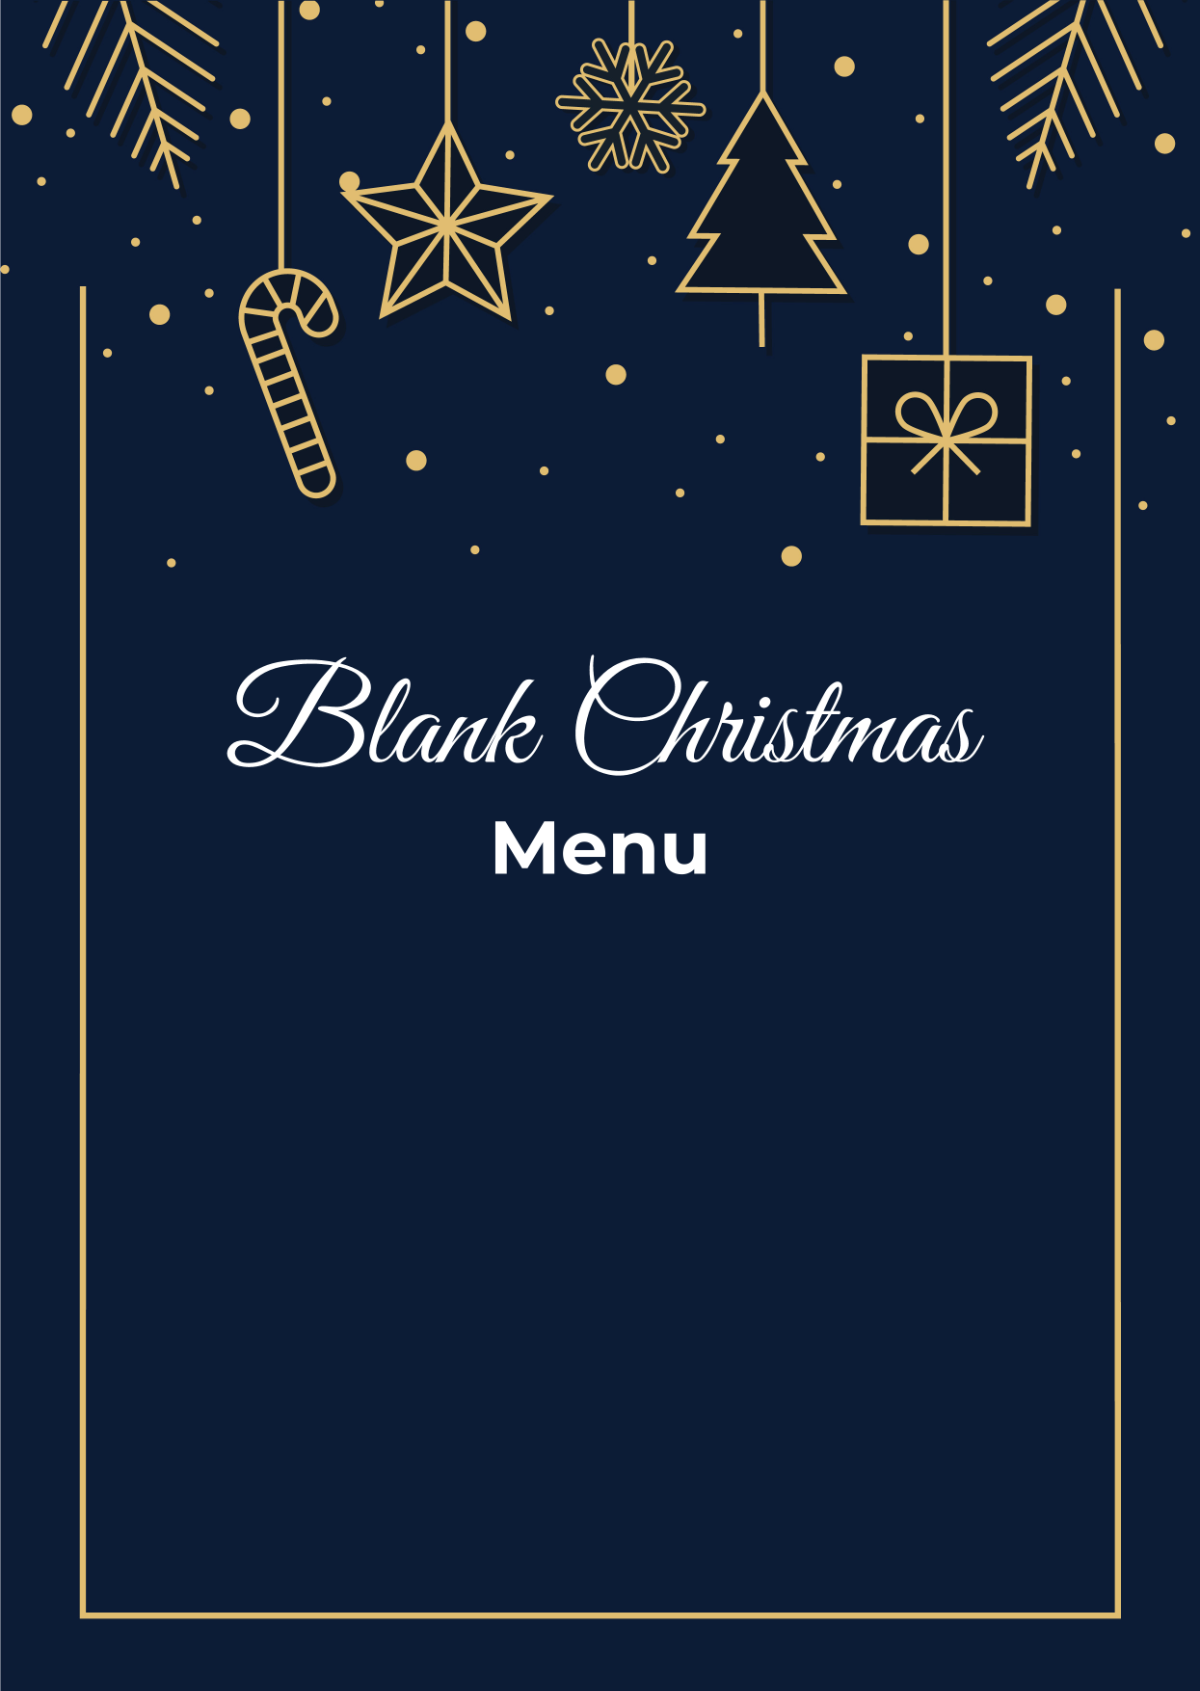 Free Blank Christmas Menu Template